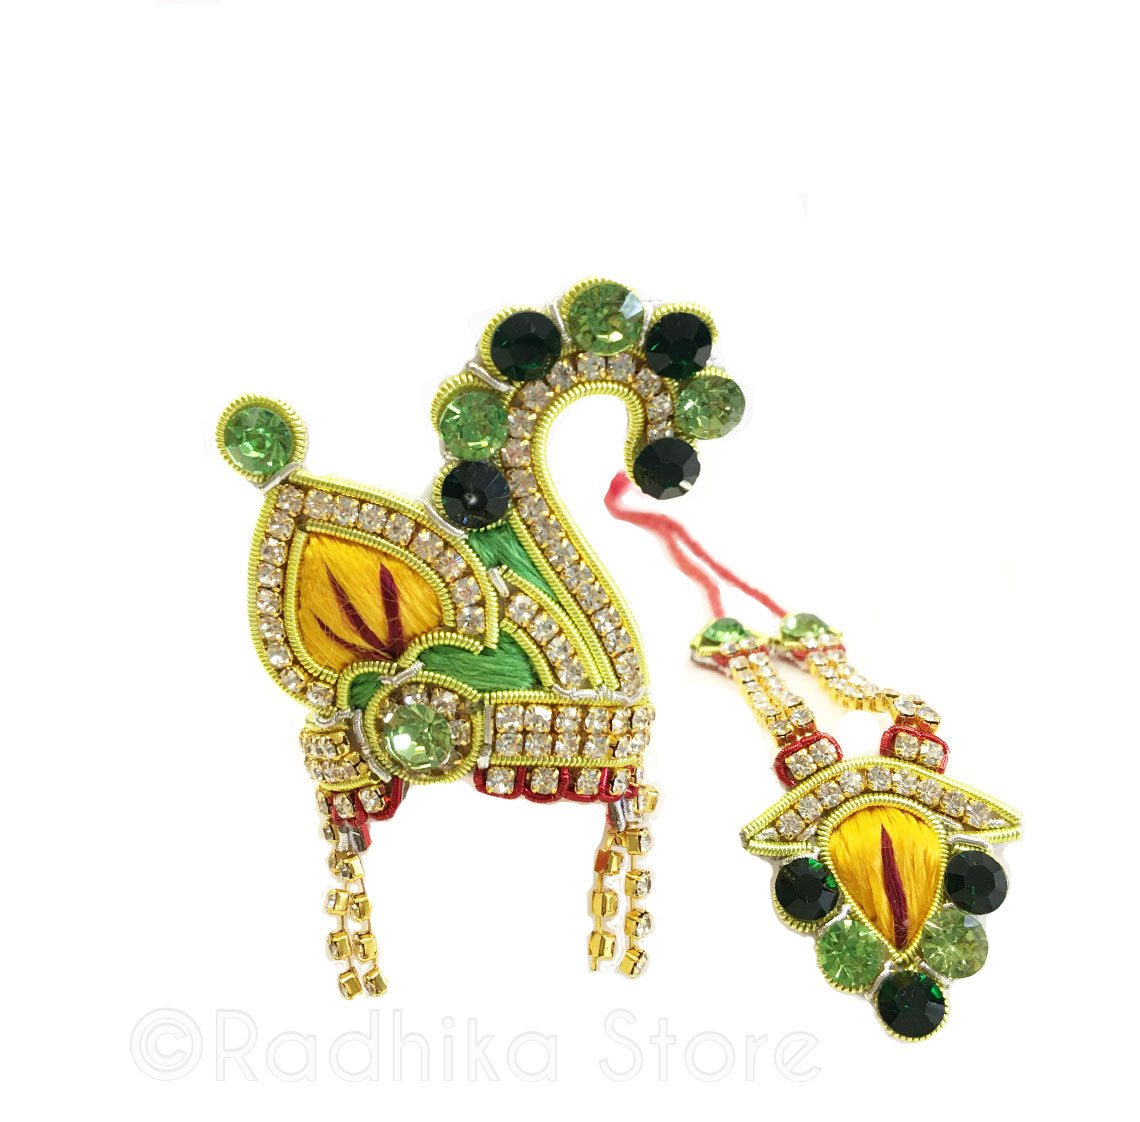 Kusham Sarovara Swan Crown and Necklace Set- Green and Marigold Colors